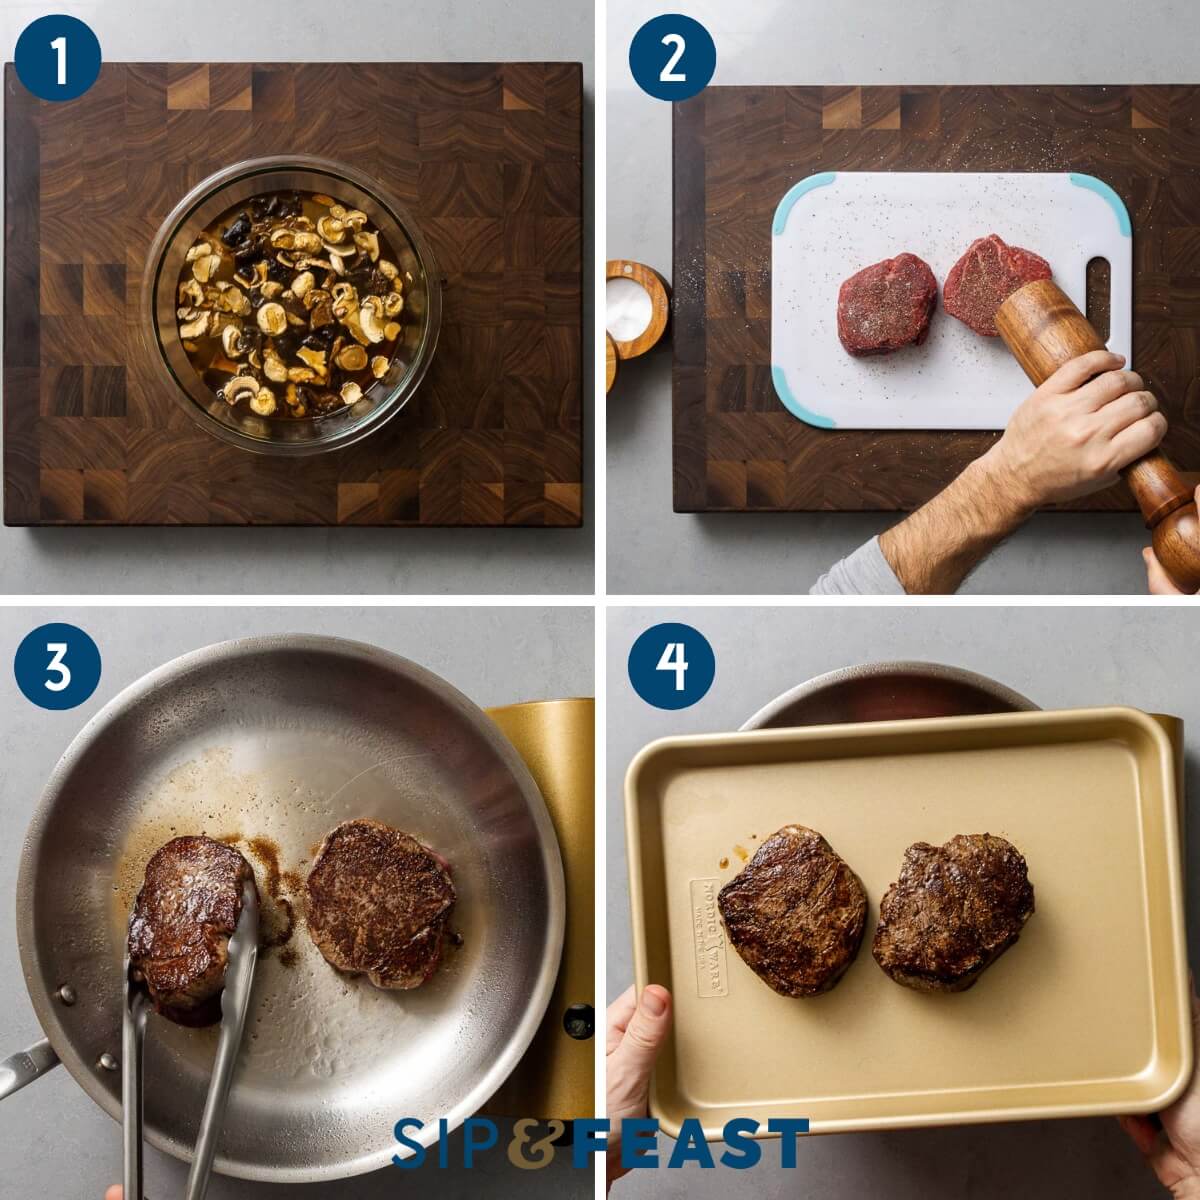 Beef marsala recipe collage number one showing soaking of dried mushooms, seasoning beef, and searing beef in stainless steel pan.